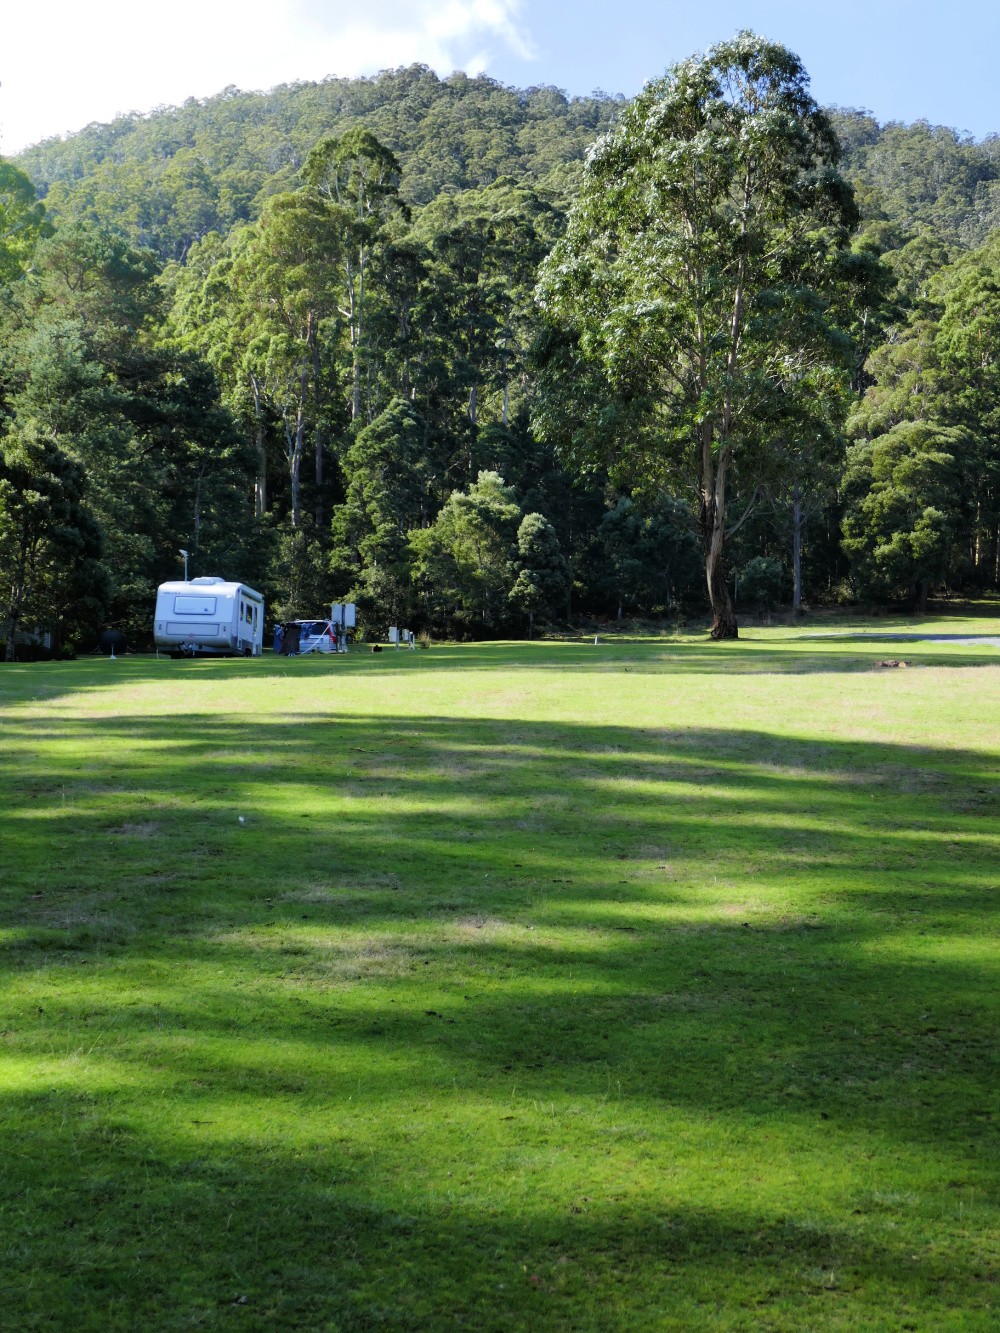 A lone caravan in a caravan park during covid-19